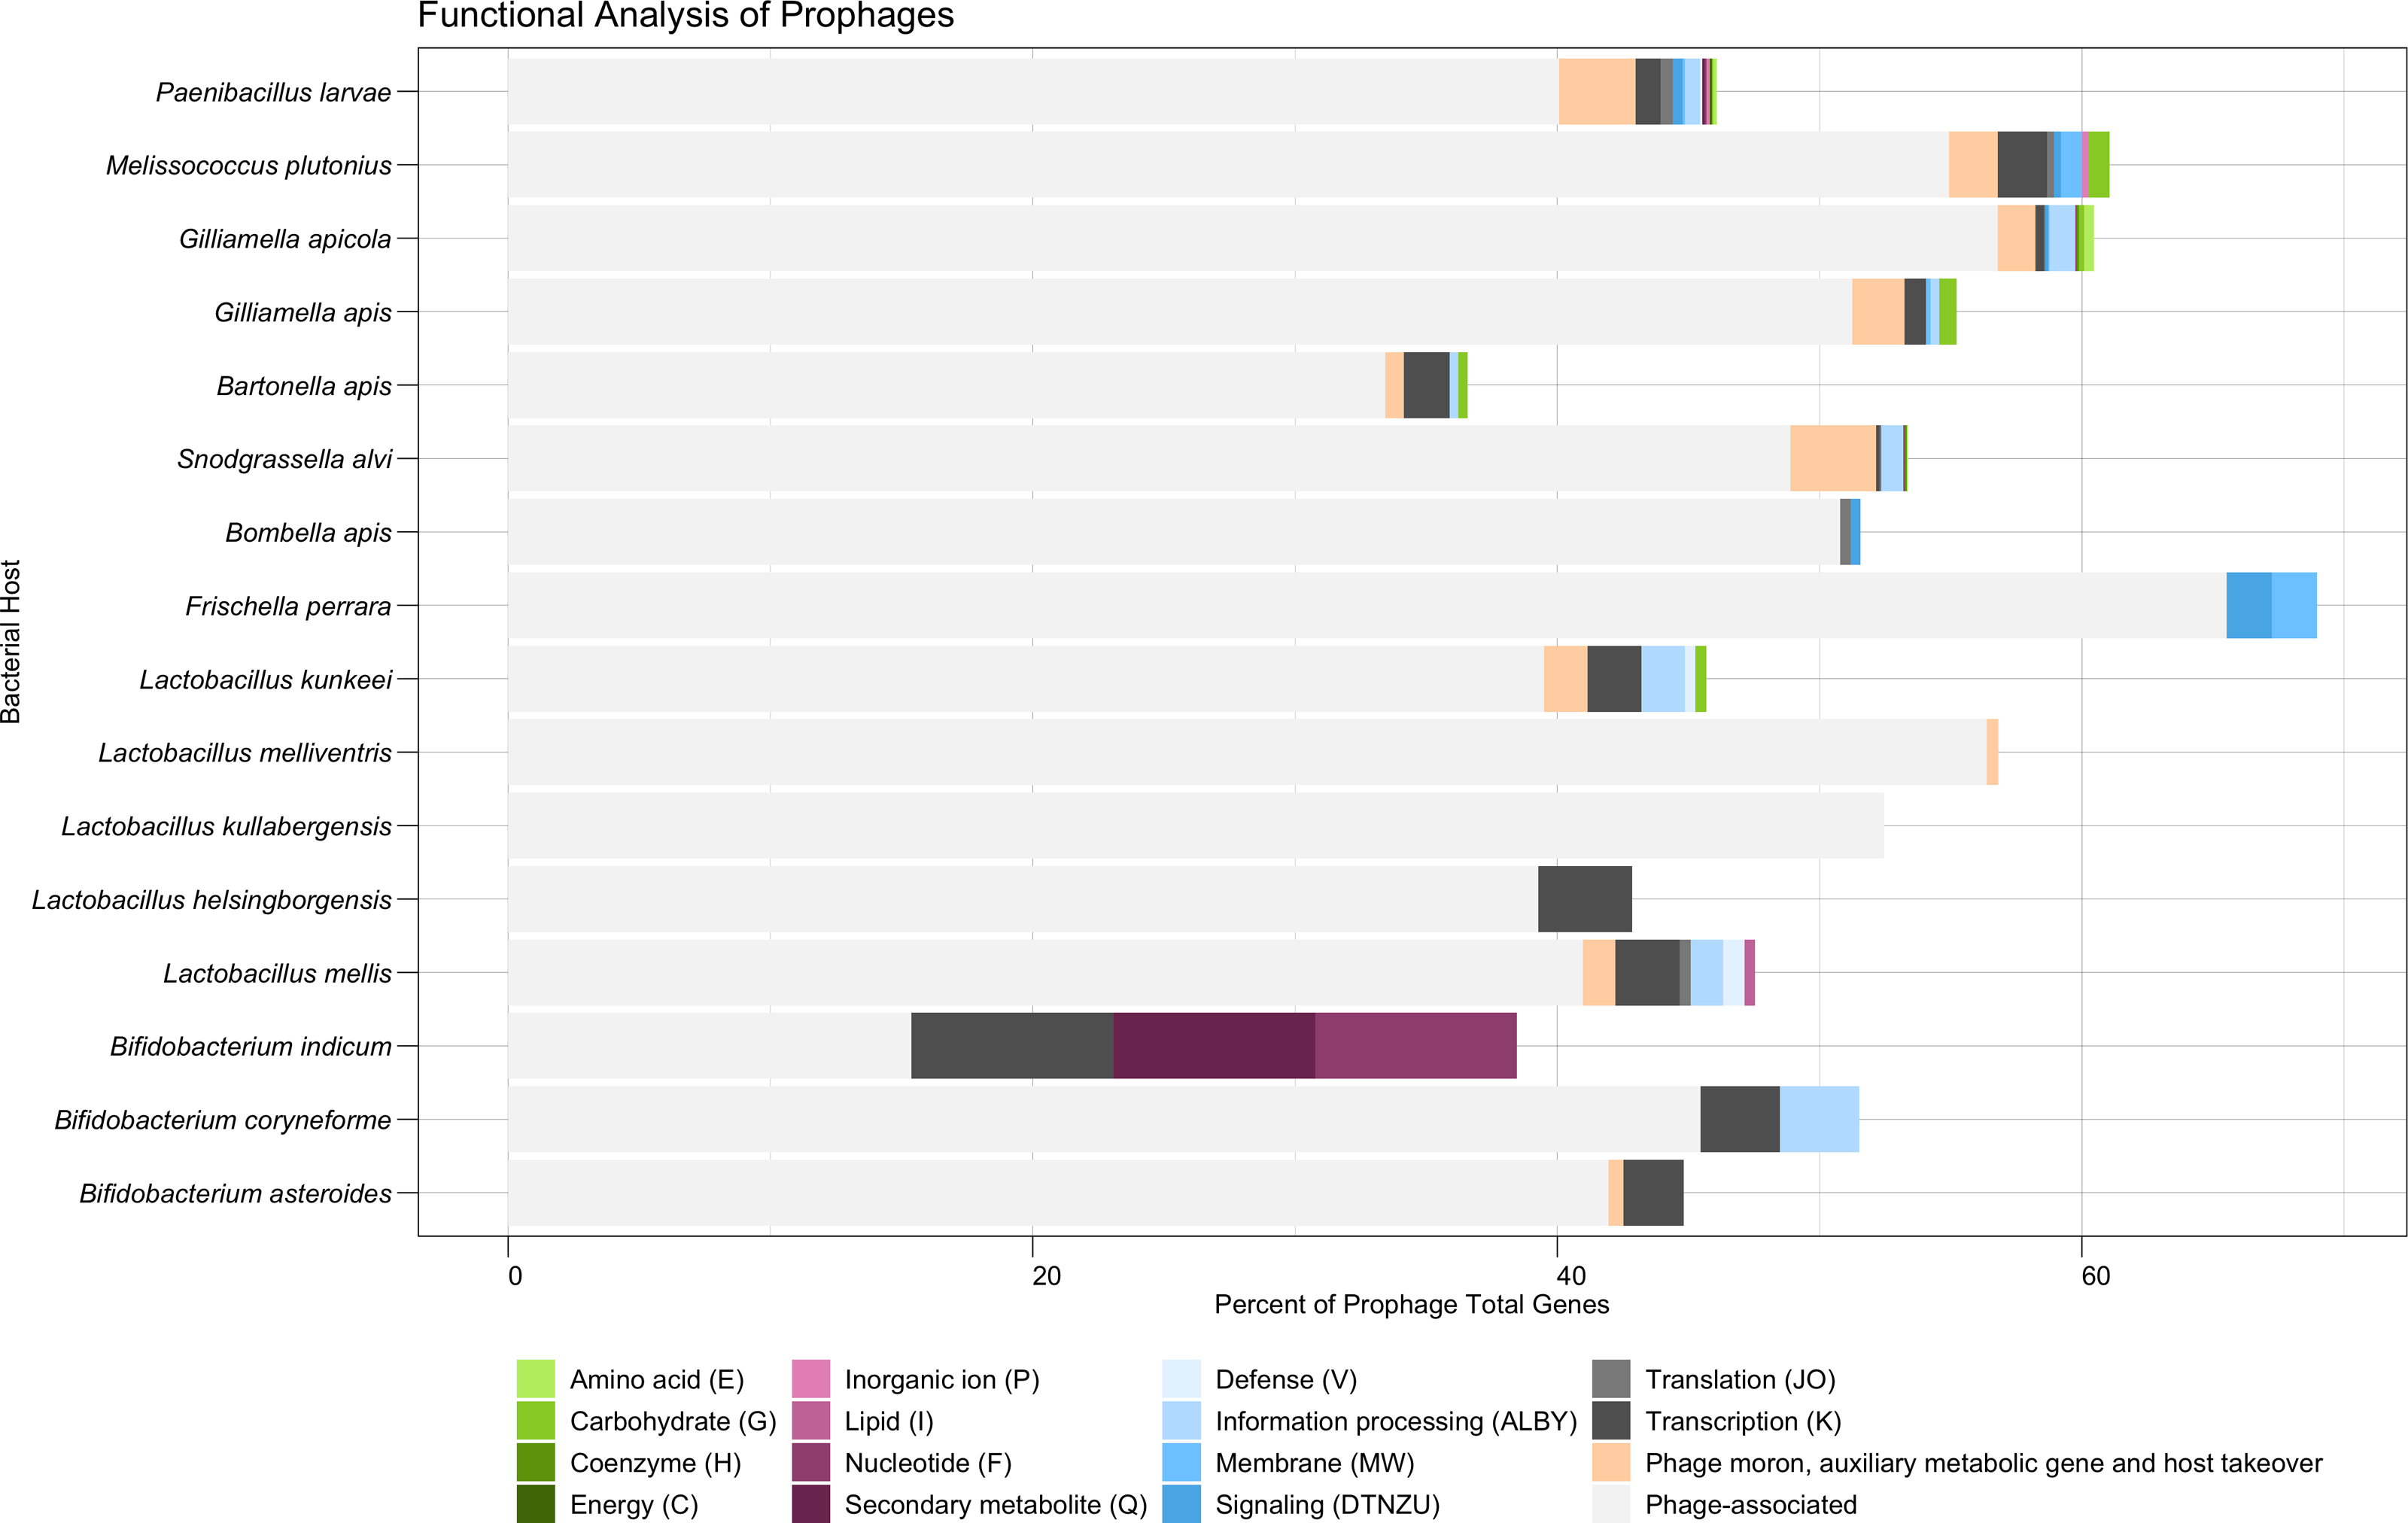 Piggyback-the-Winner in host-associated microbial communities